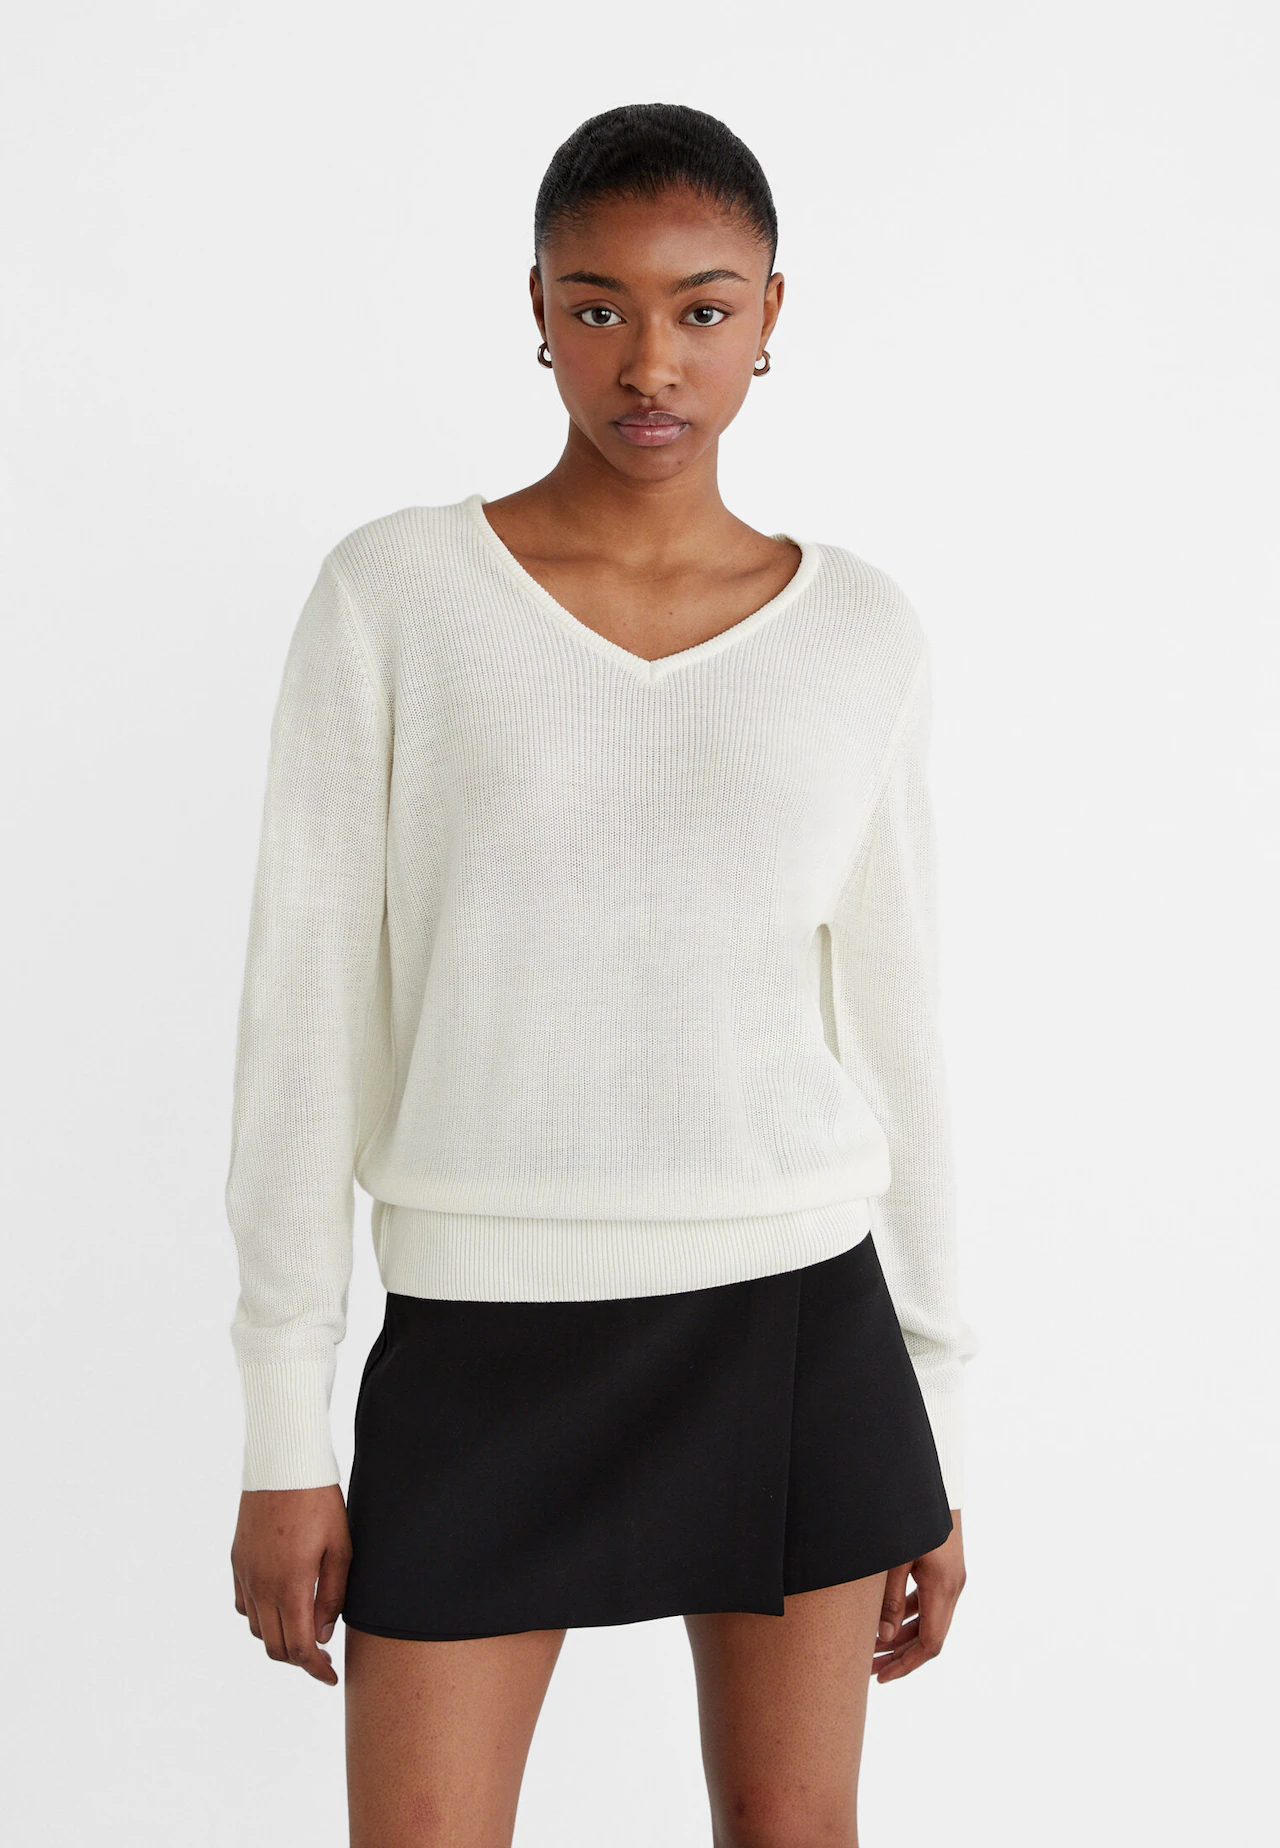 V-neck knit sweater - Women's fashion